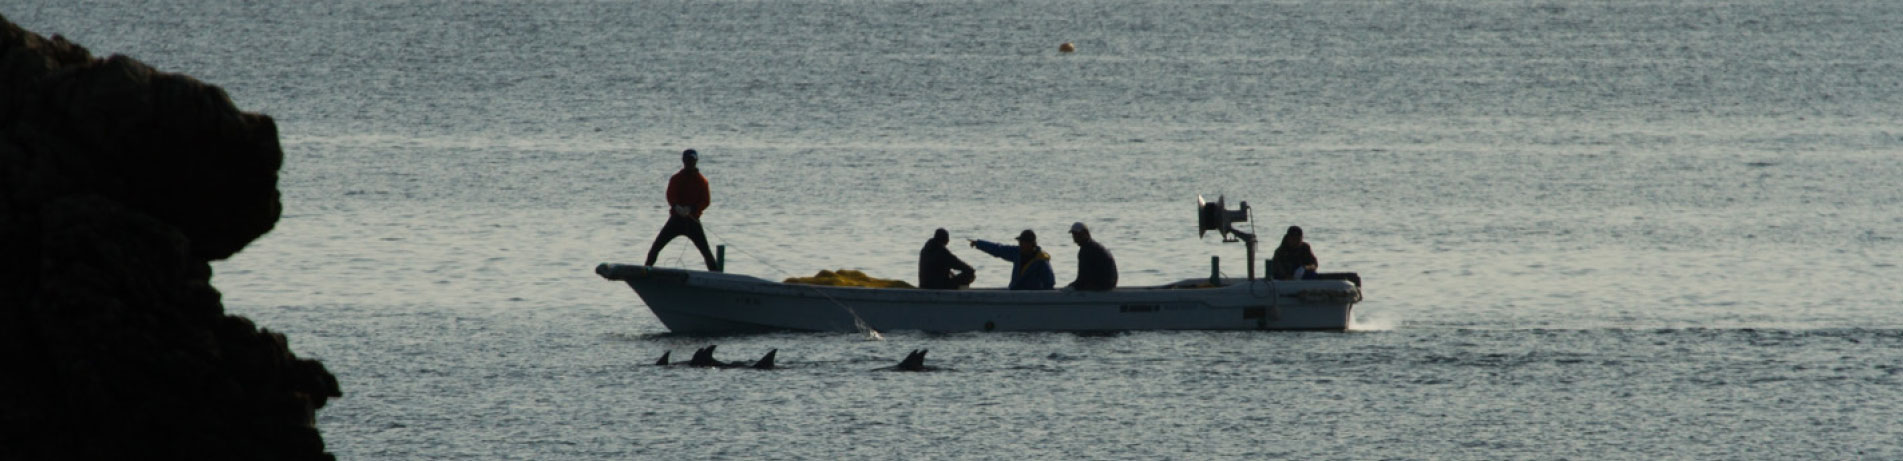 Japanese fishermen hunting dolphins, Taiji, Japan